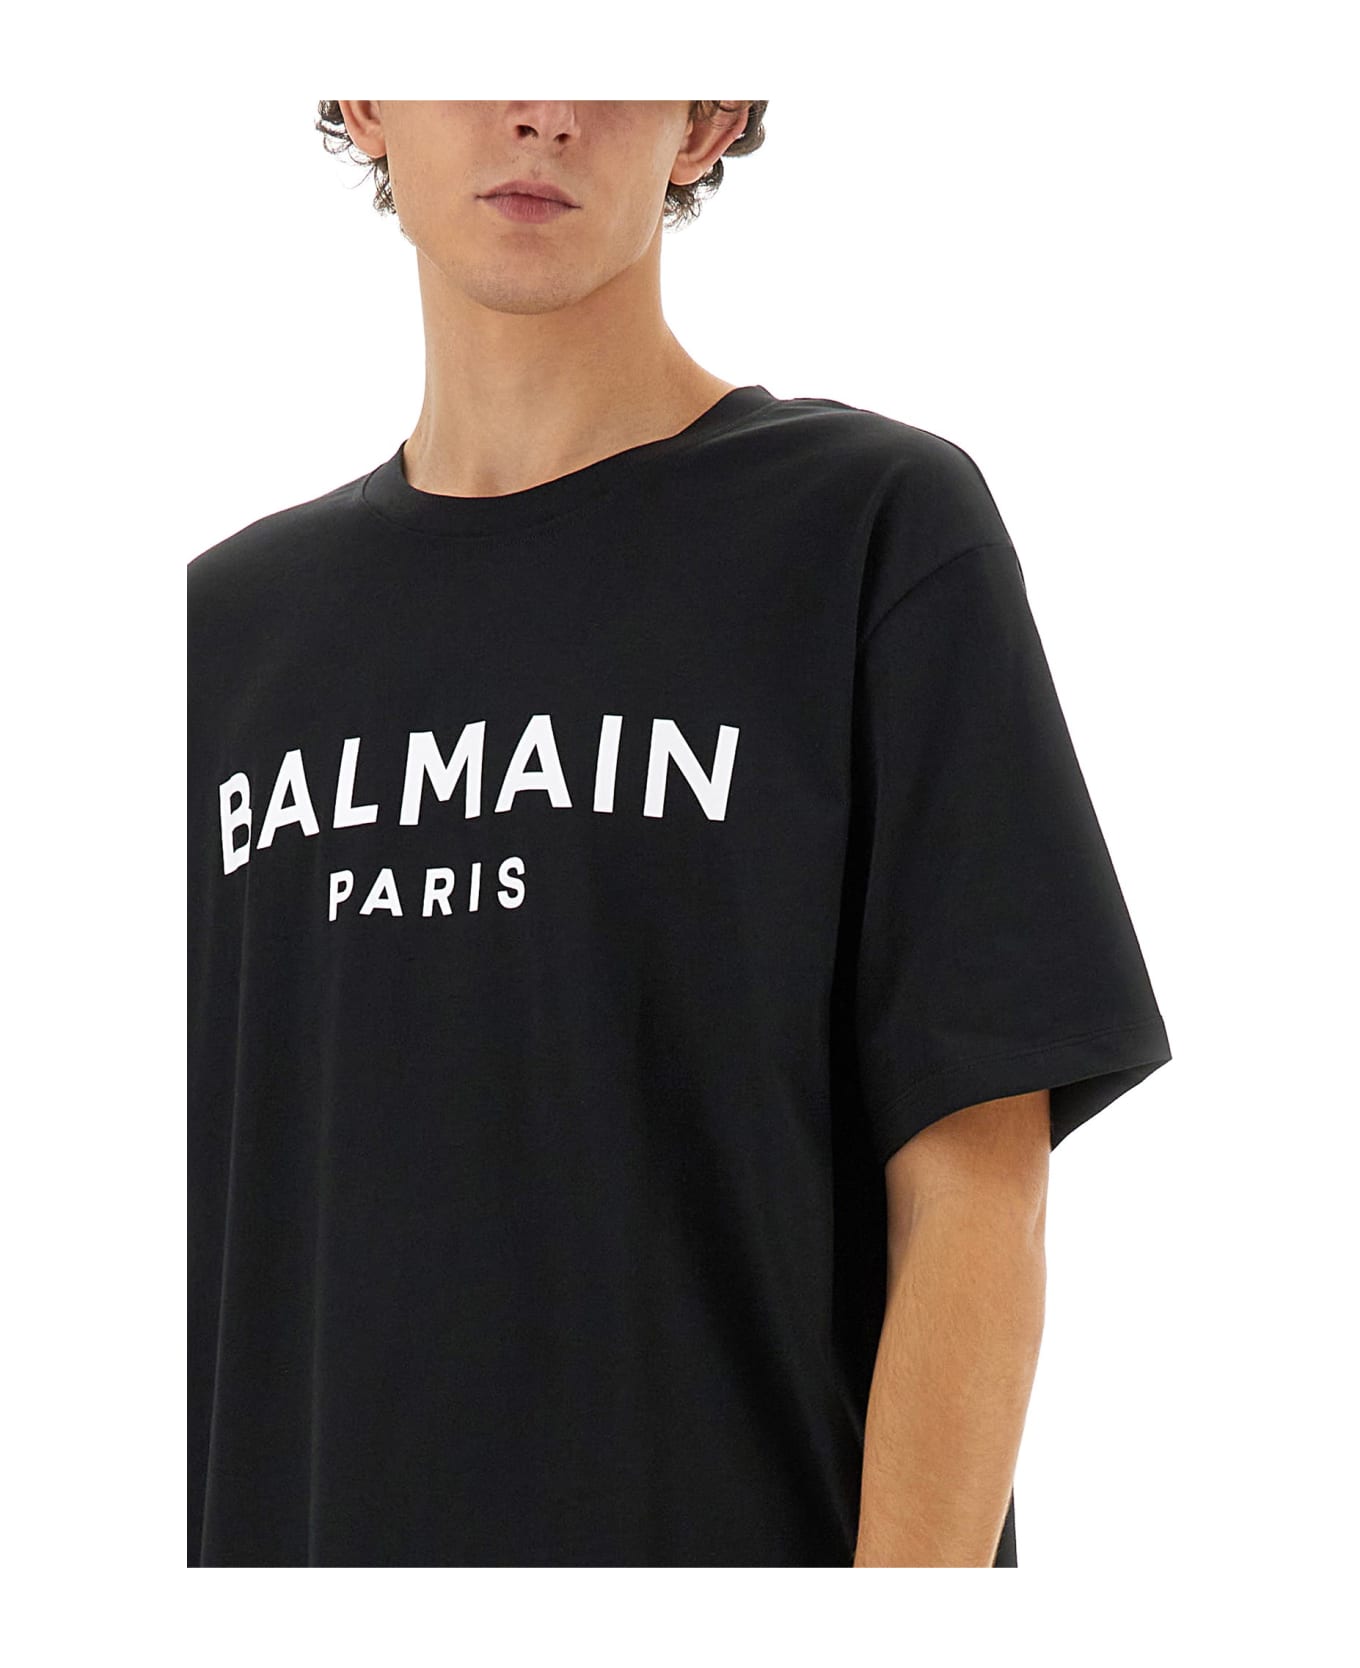 Balmain Logo Print T-shirt - NERO BIANCO